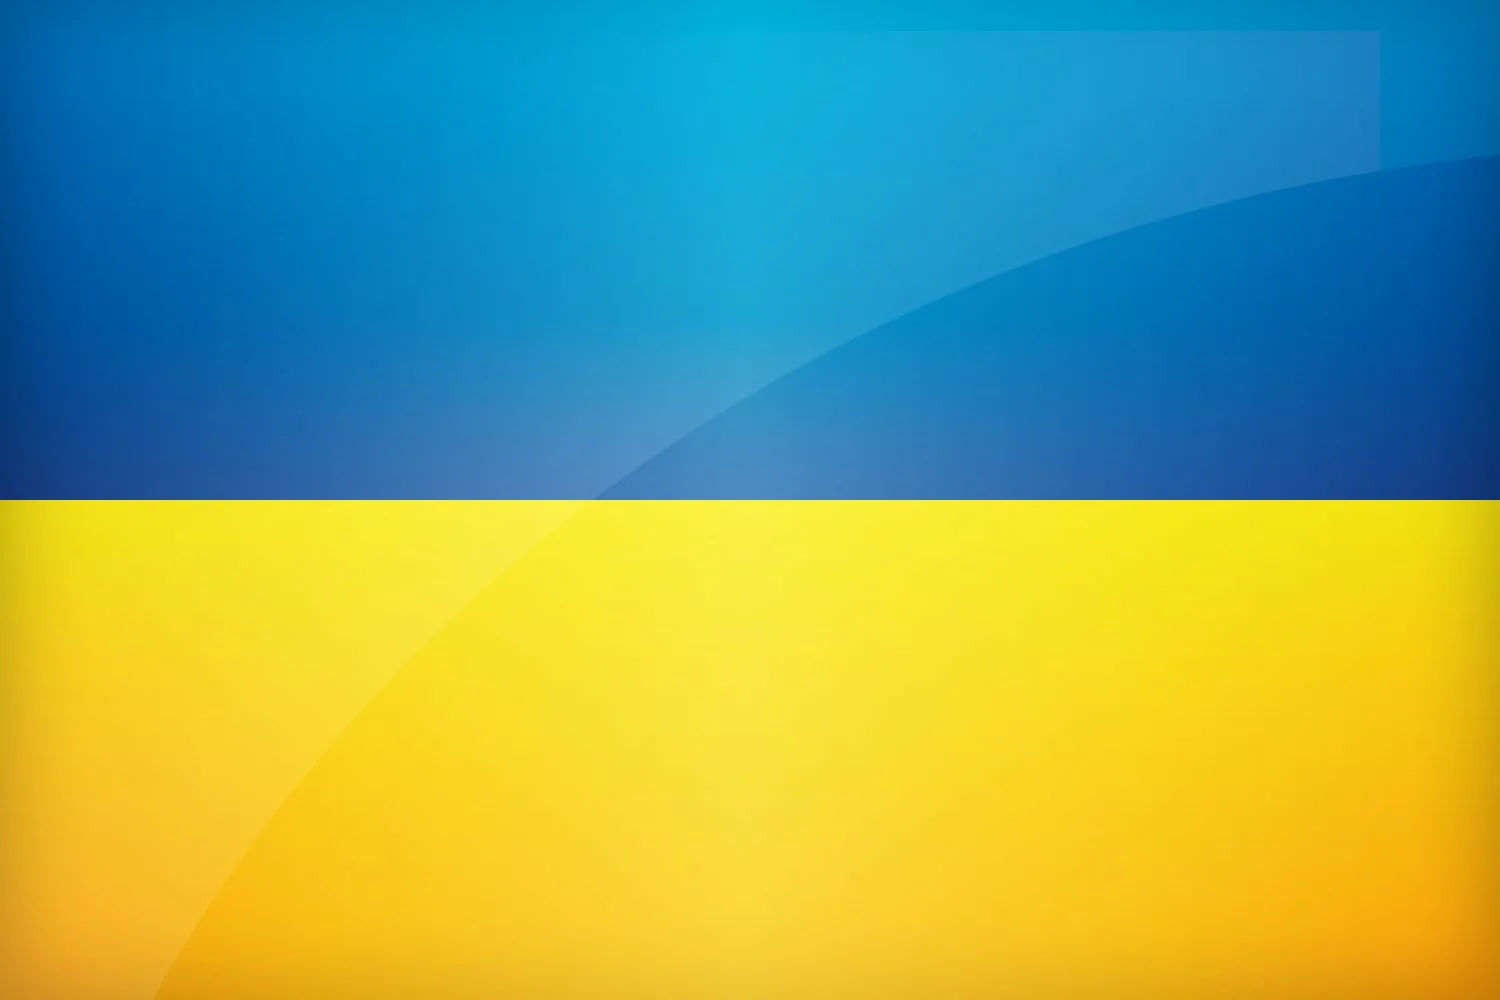 Ukrainian 1. Жовто-блакитный флаг. Флаг Украины. Флаг Украины жовто блакитный. Флакукроины.